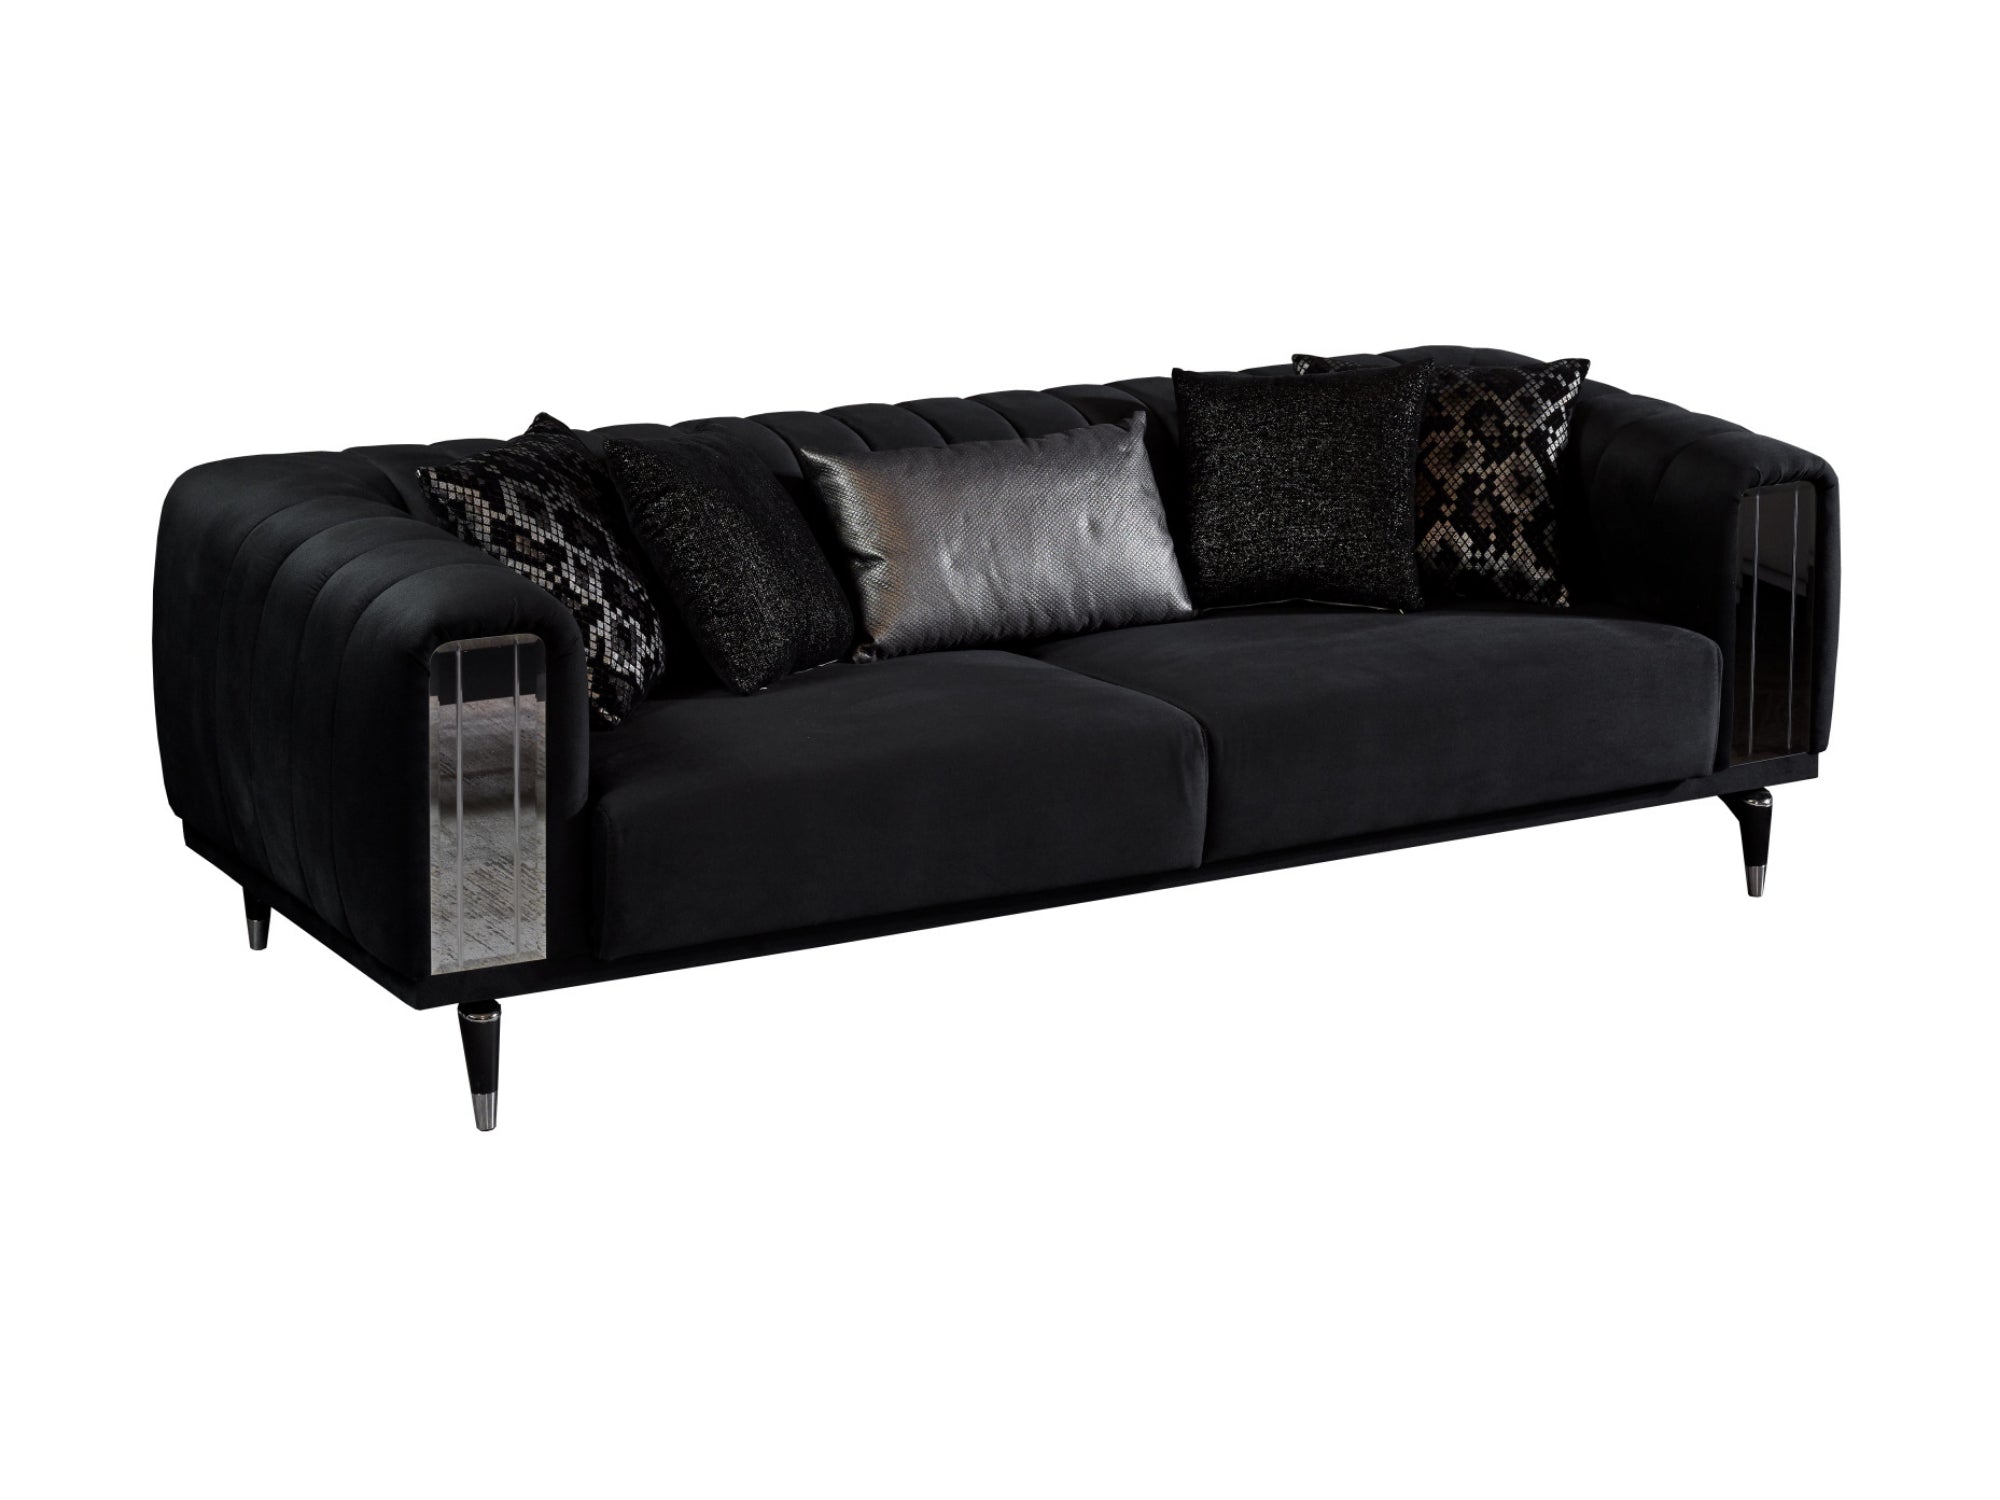 Keops Convertible Livingroom Sofa Black With Bedand Mirror